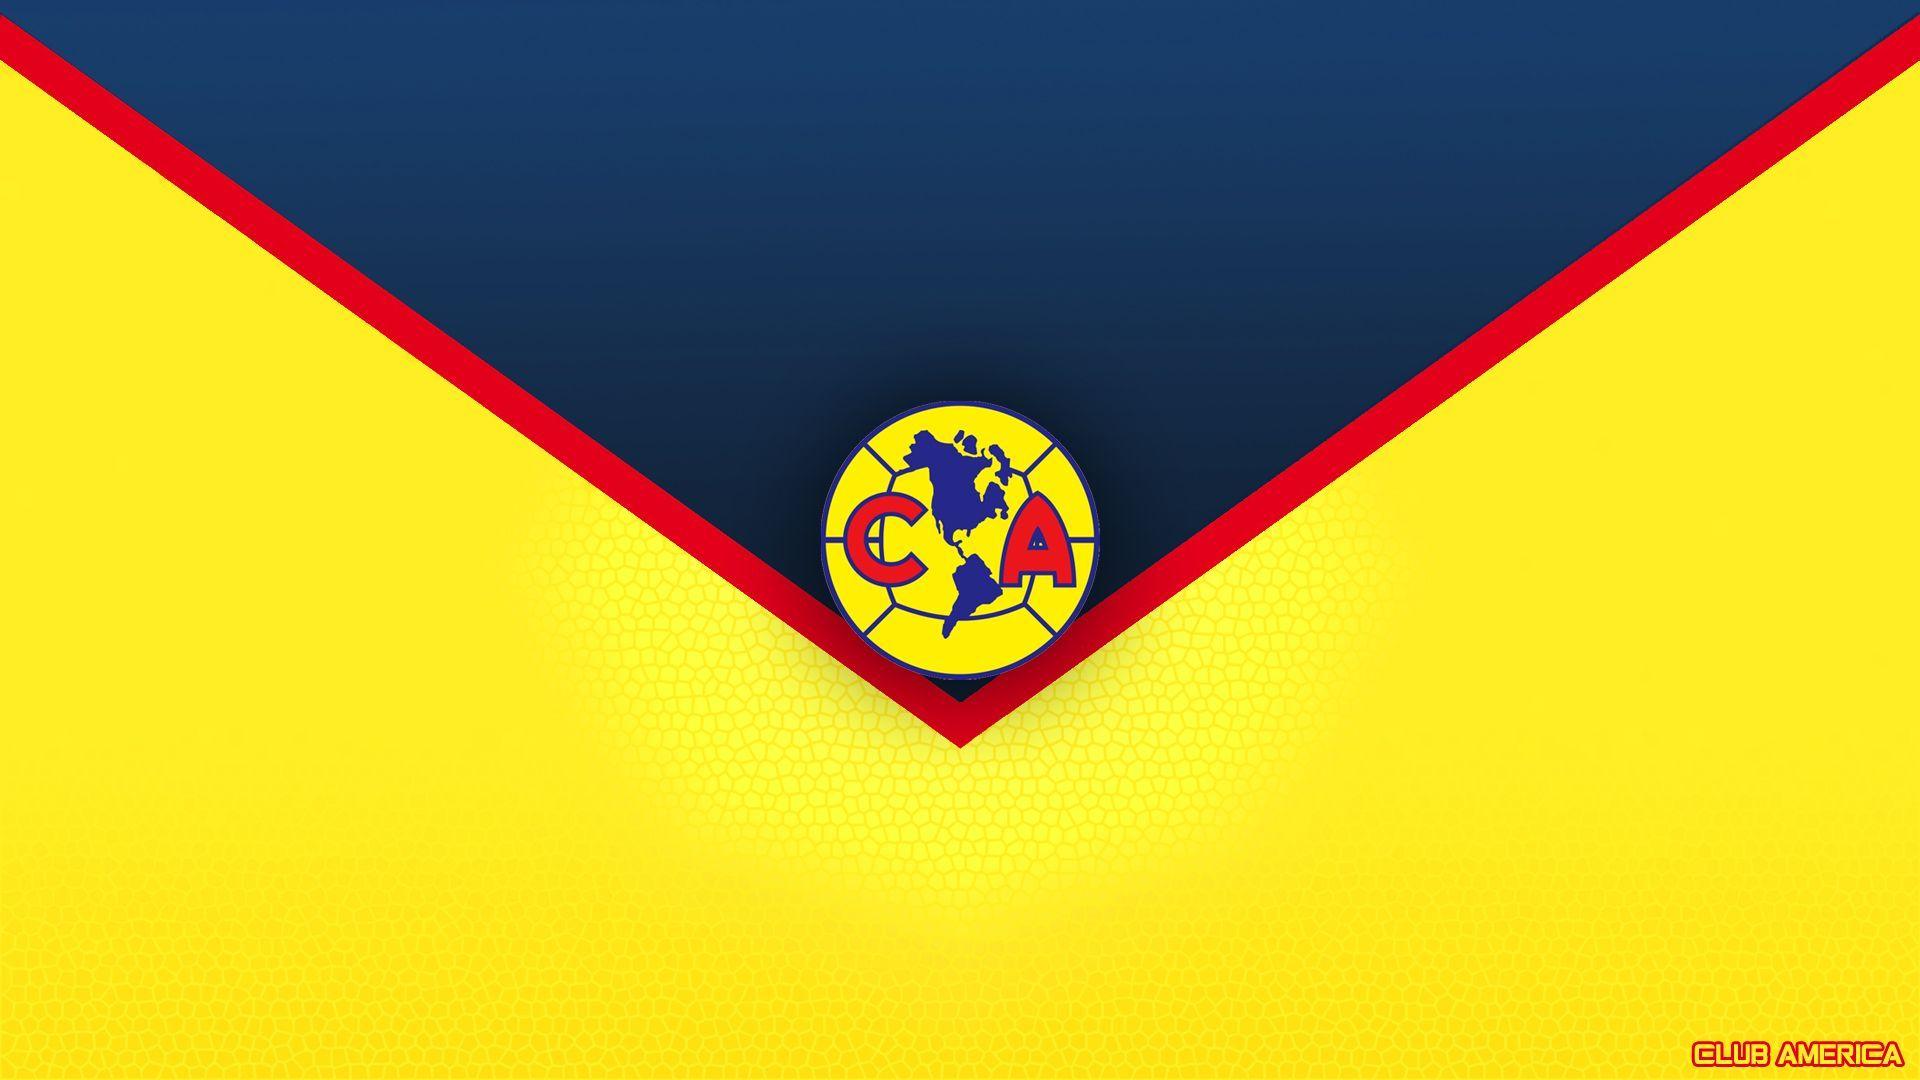 Club América Wallpapers - Wallpaper Cave